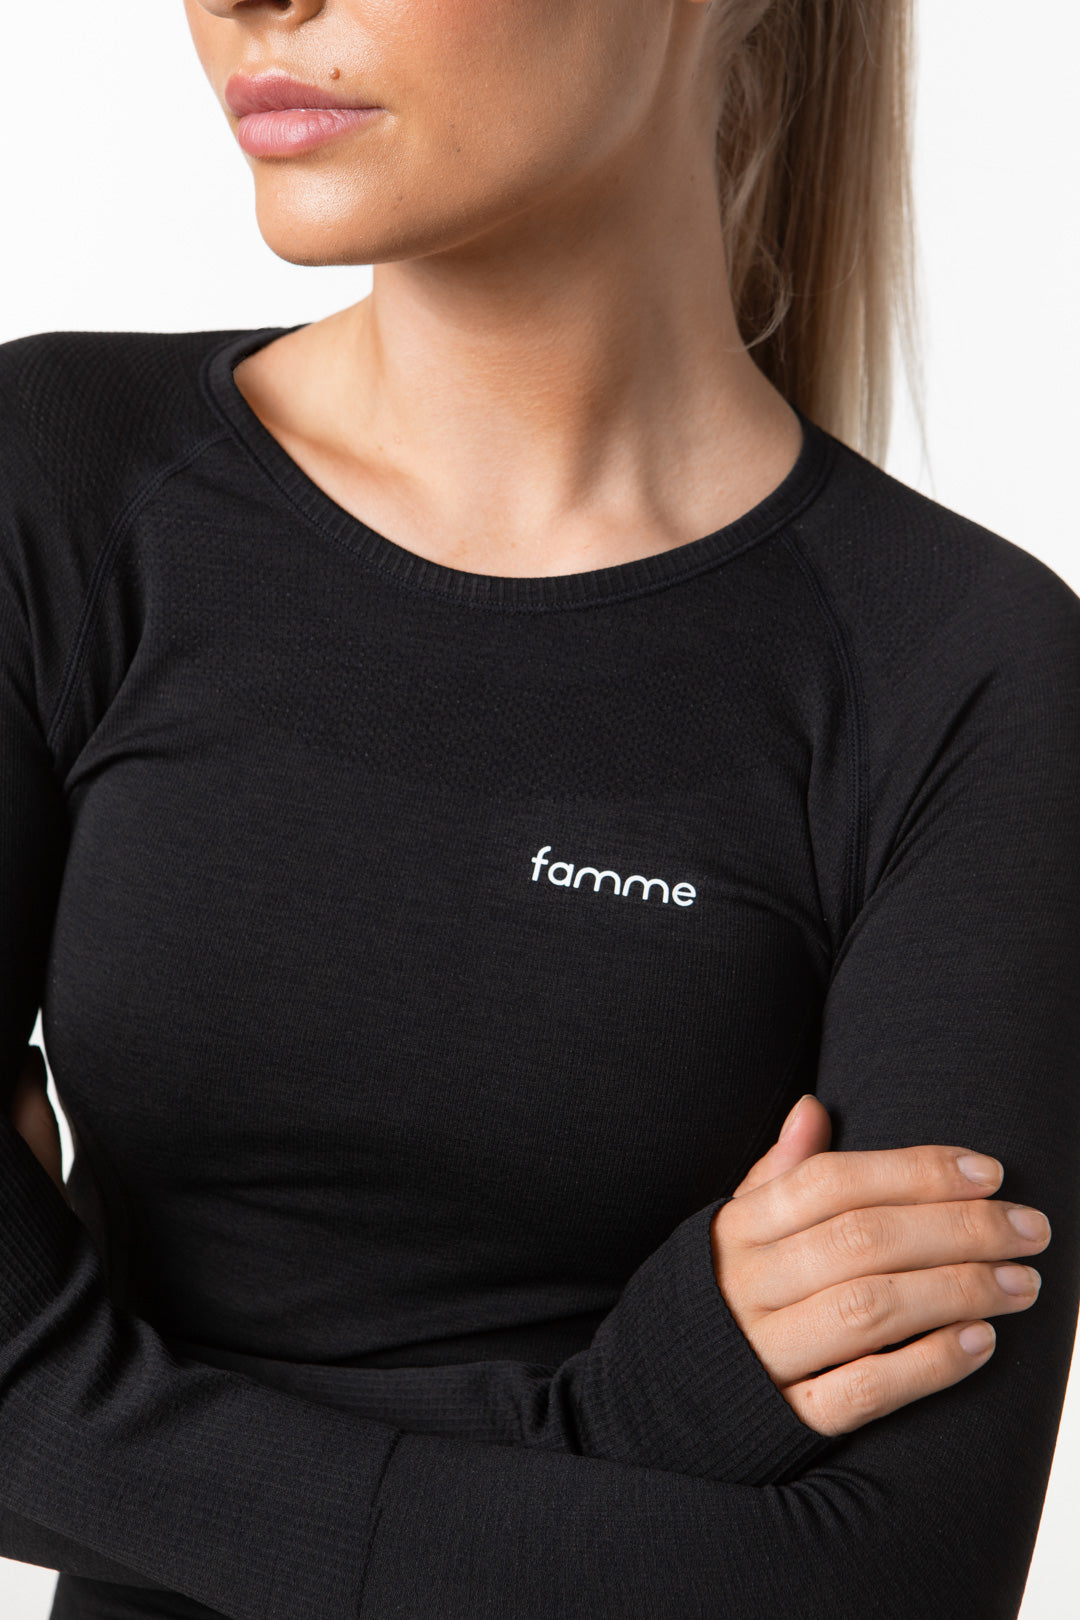 Black Tech LS T-Shirt - for dame - Famme - Training Long Sleeve